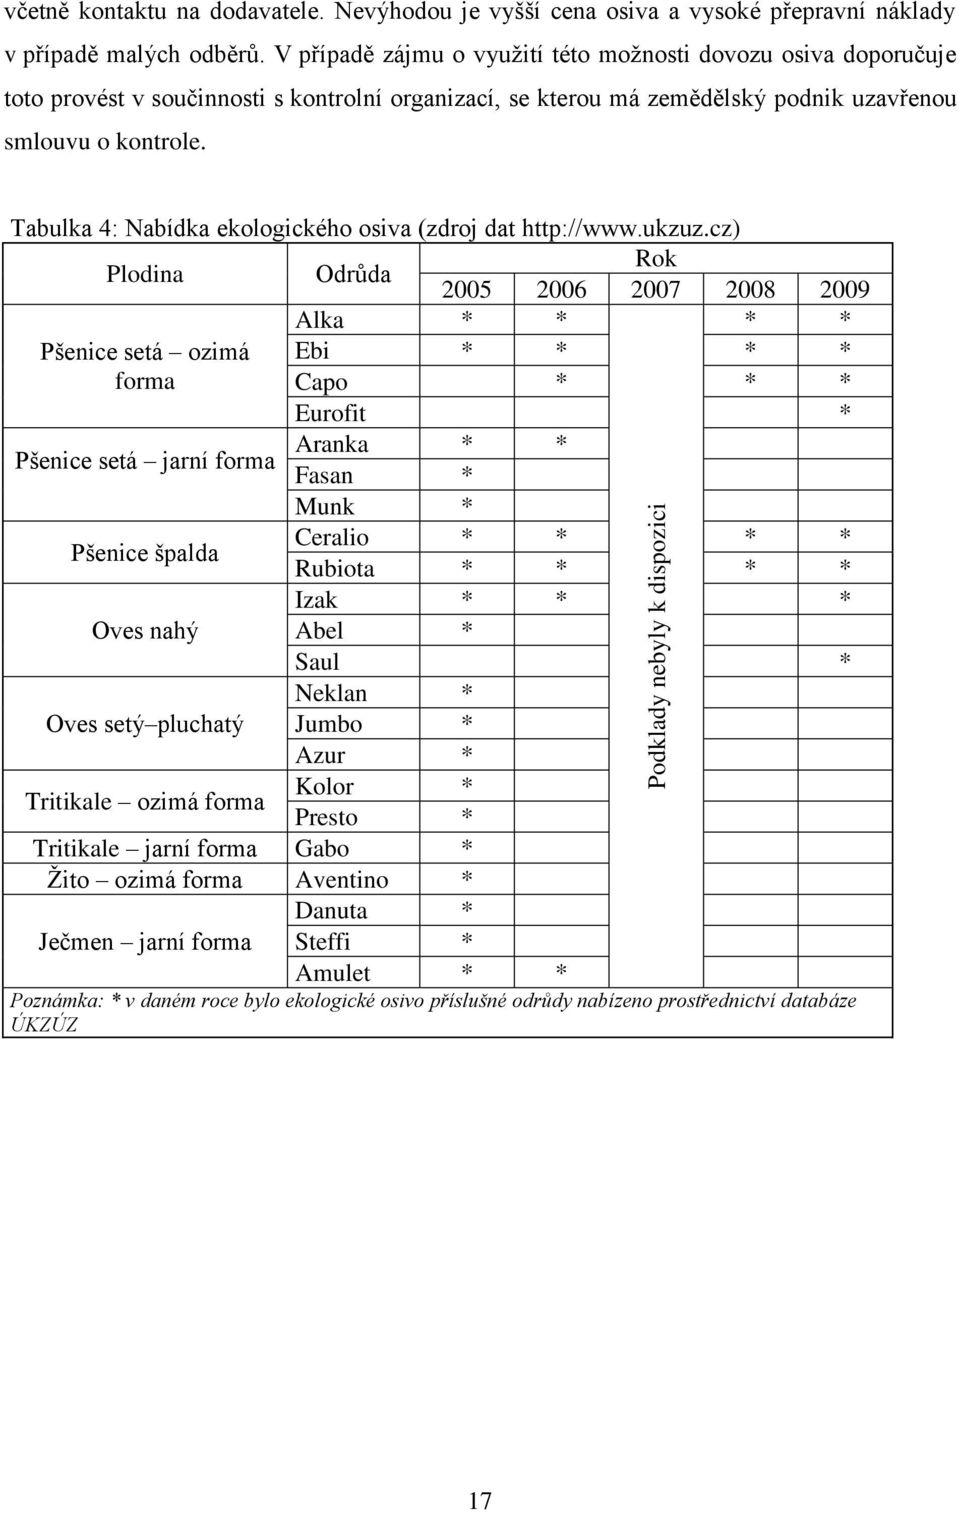 Tabulka 4: Nabídka ekologického osiva (zdroj dat http://www.ukzuz.